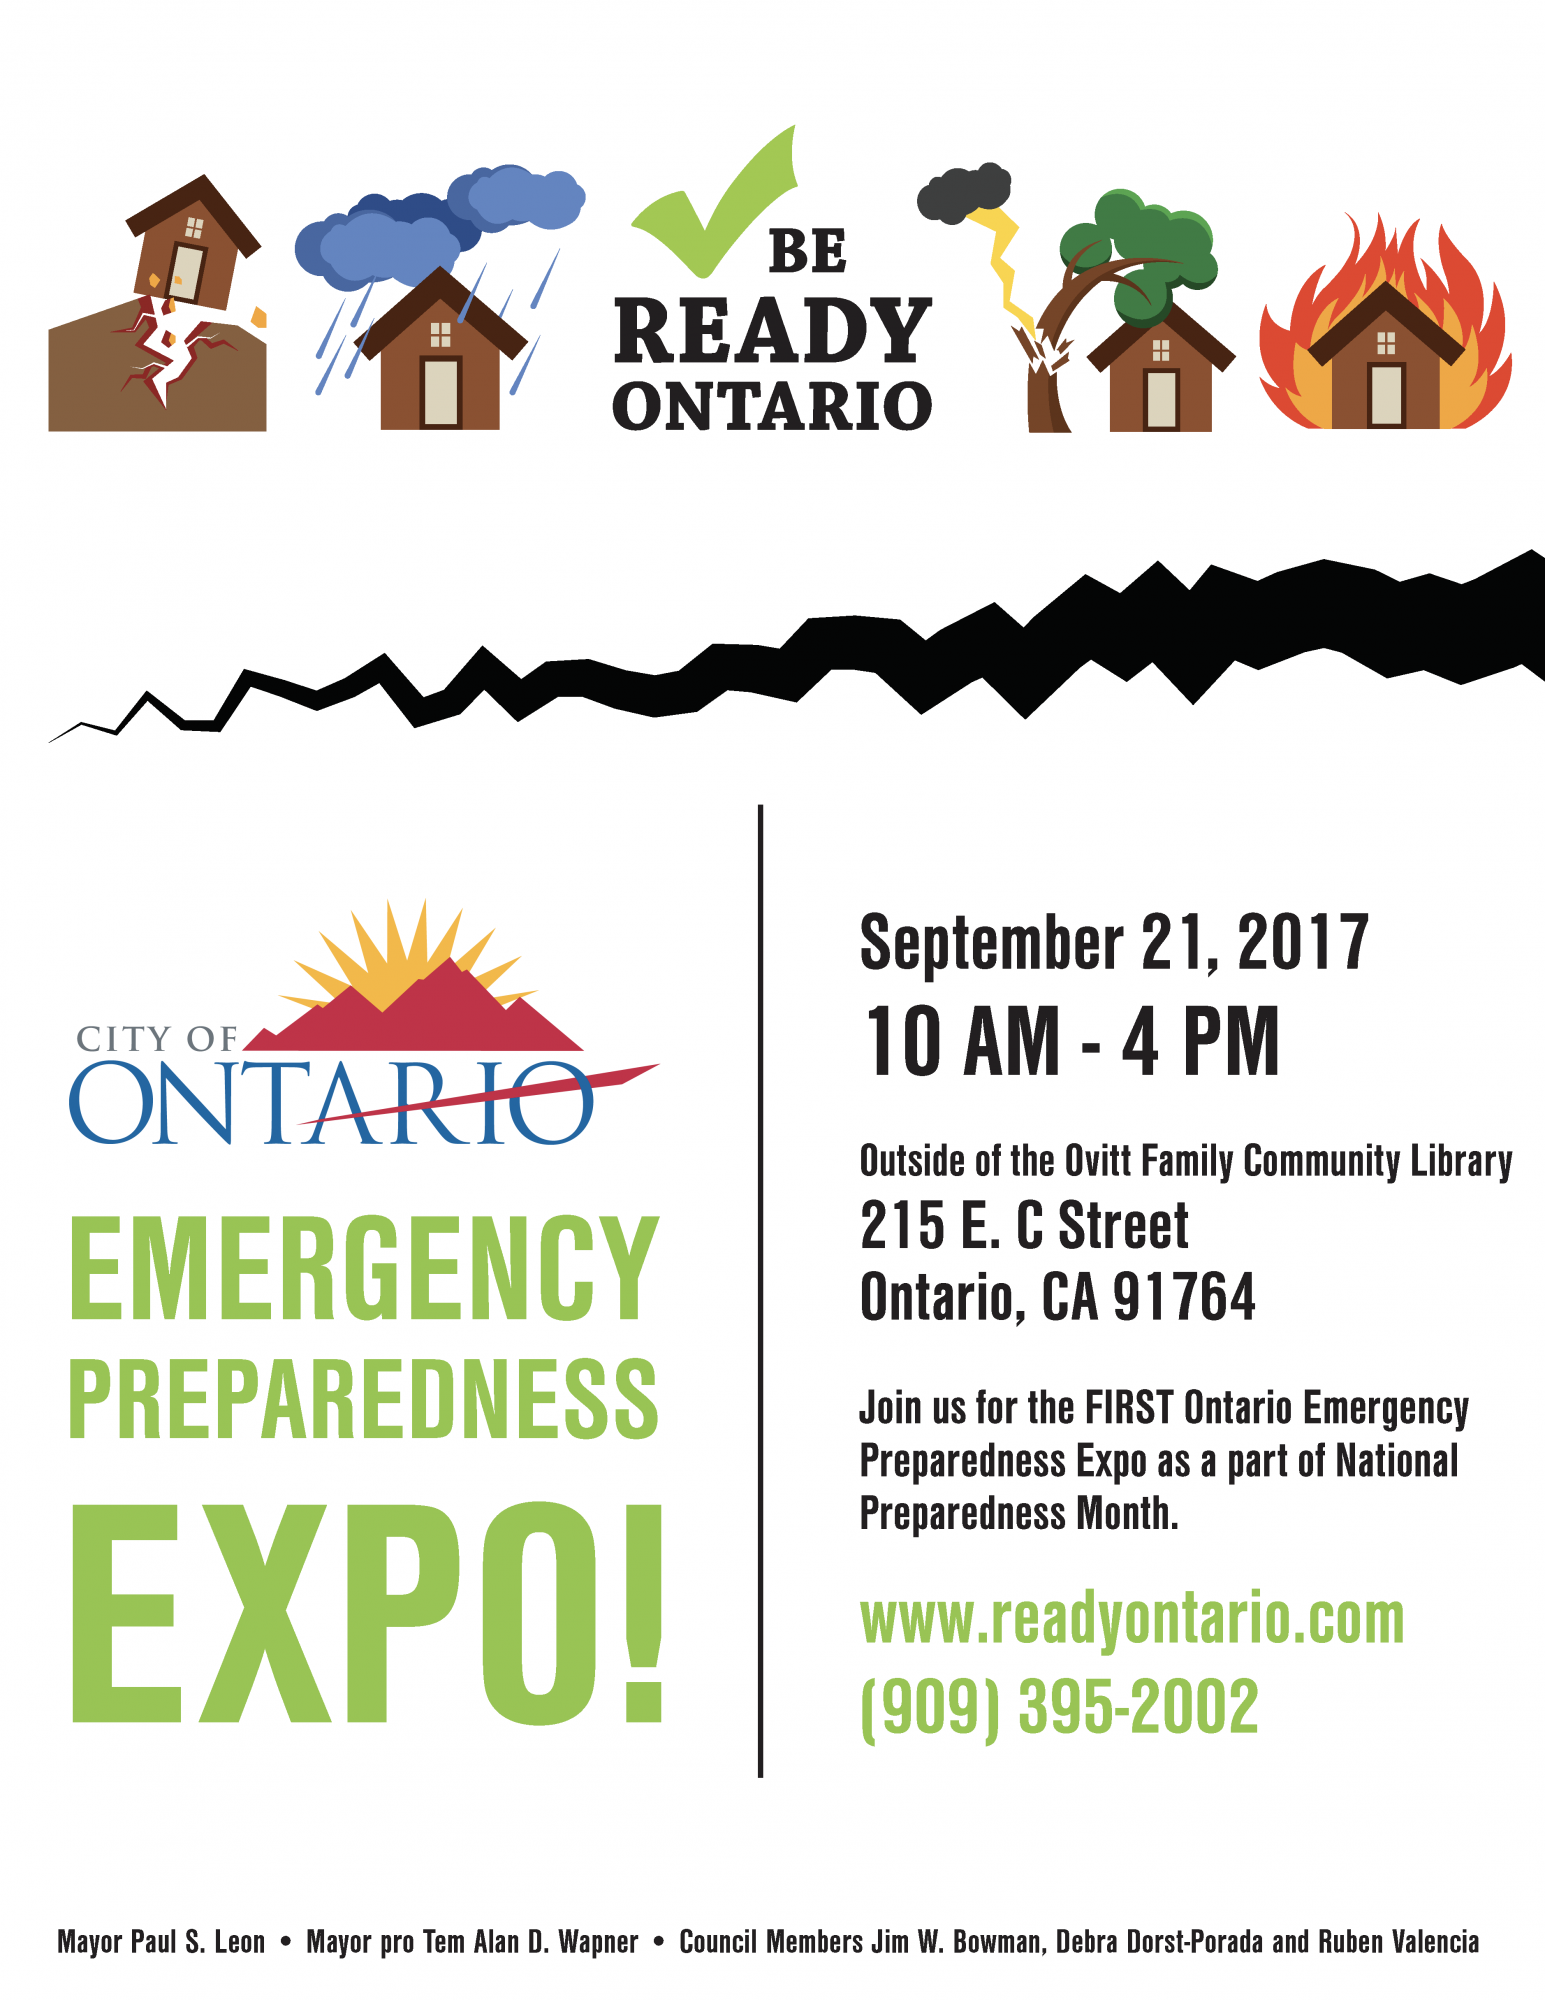 Emergency Preparedness Expo